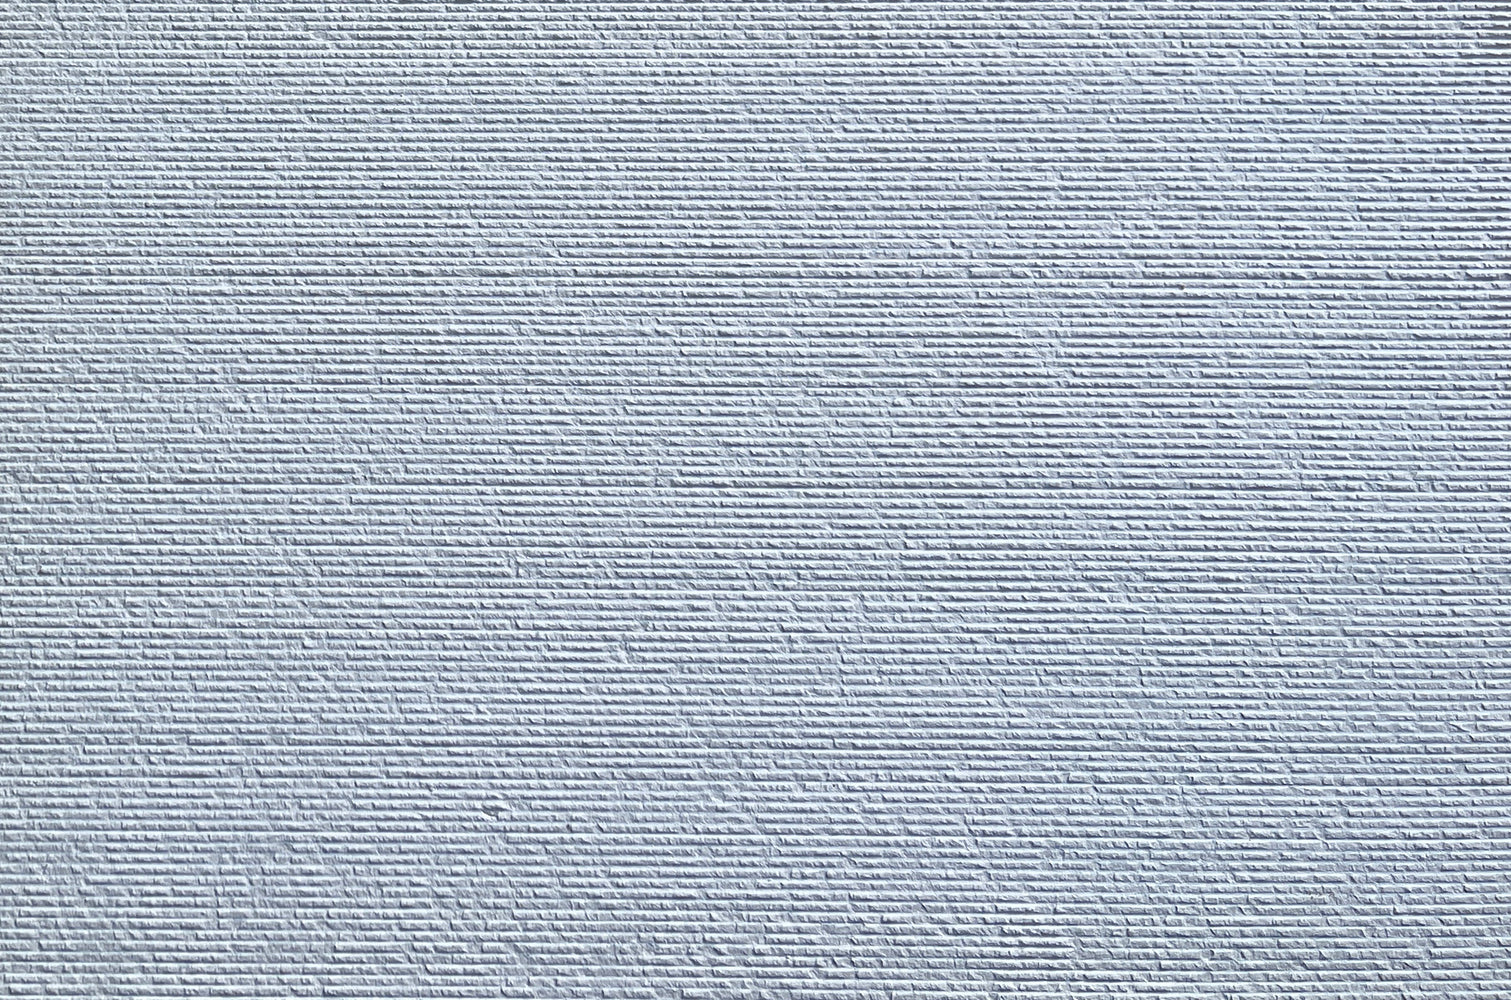 Capri Linen Textured Limestone Tile - 16" x 24" x 1/2"